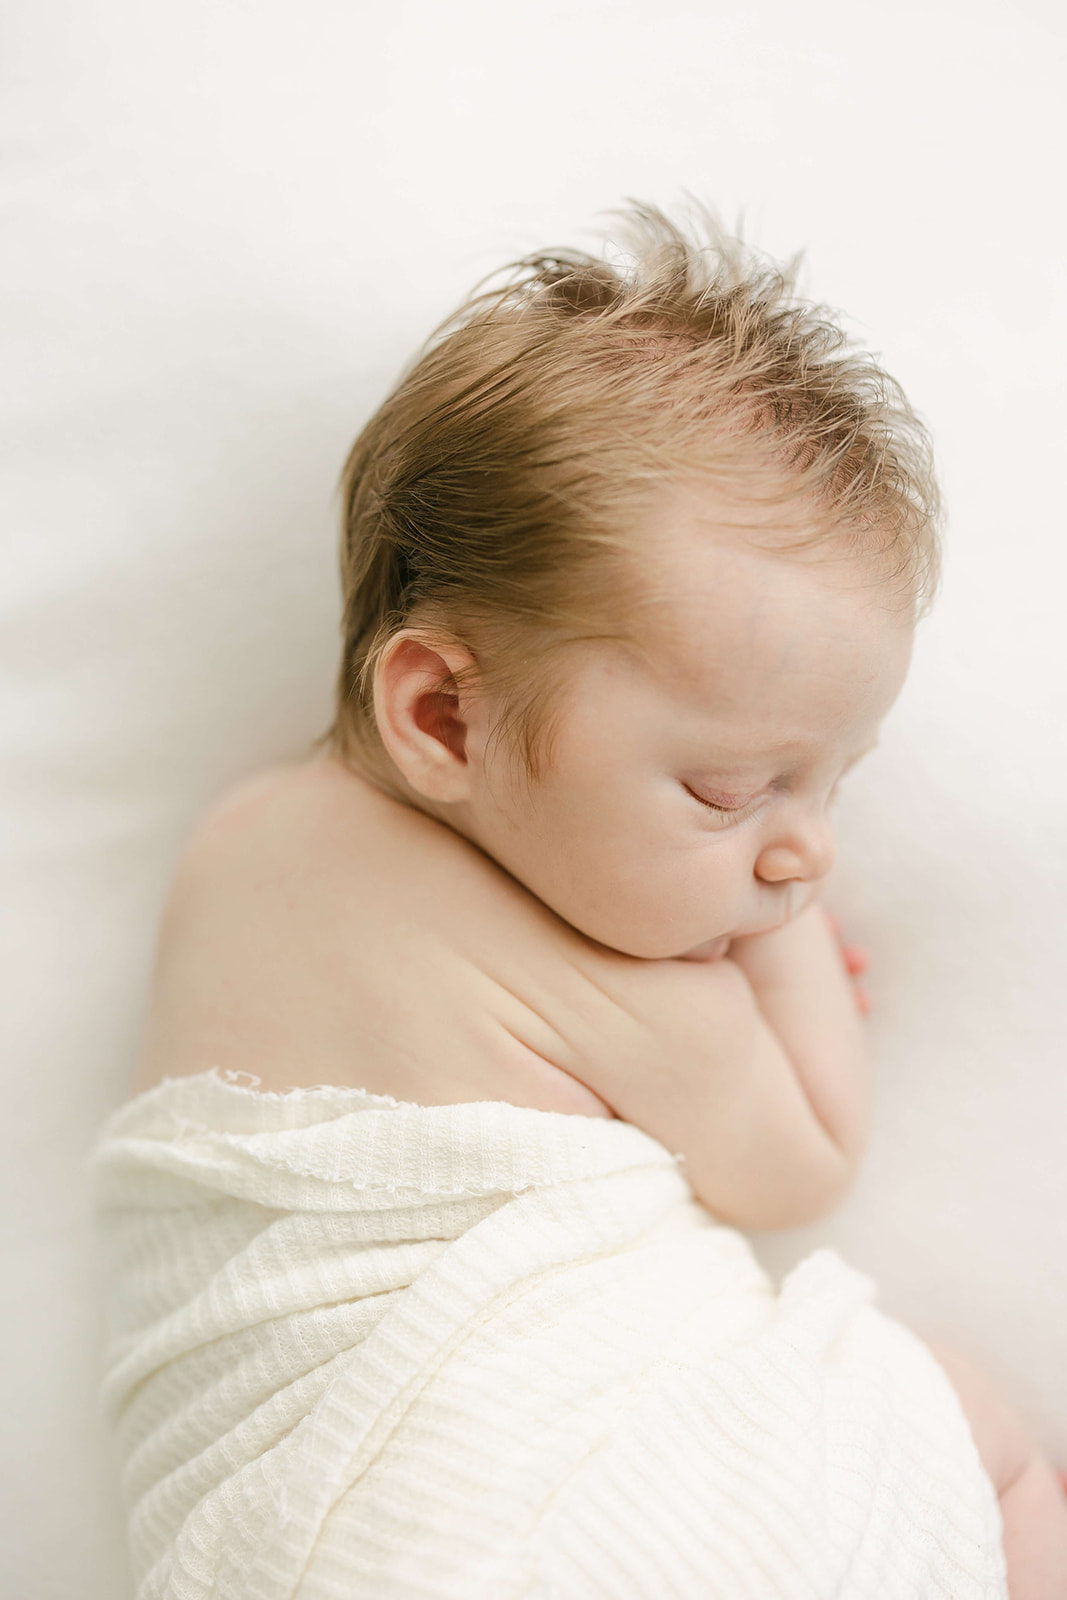 A newborn baby sleeps in a white half swaddle in a studio